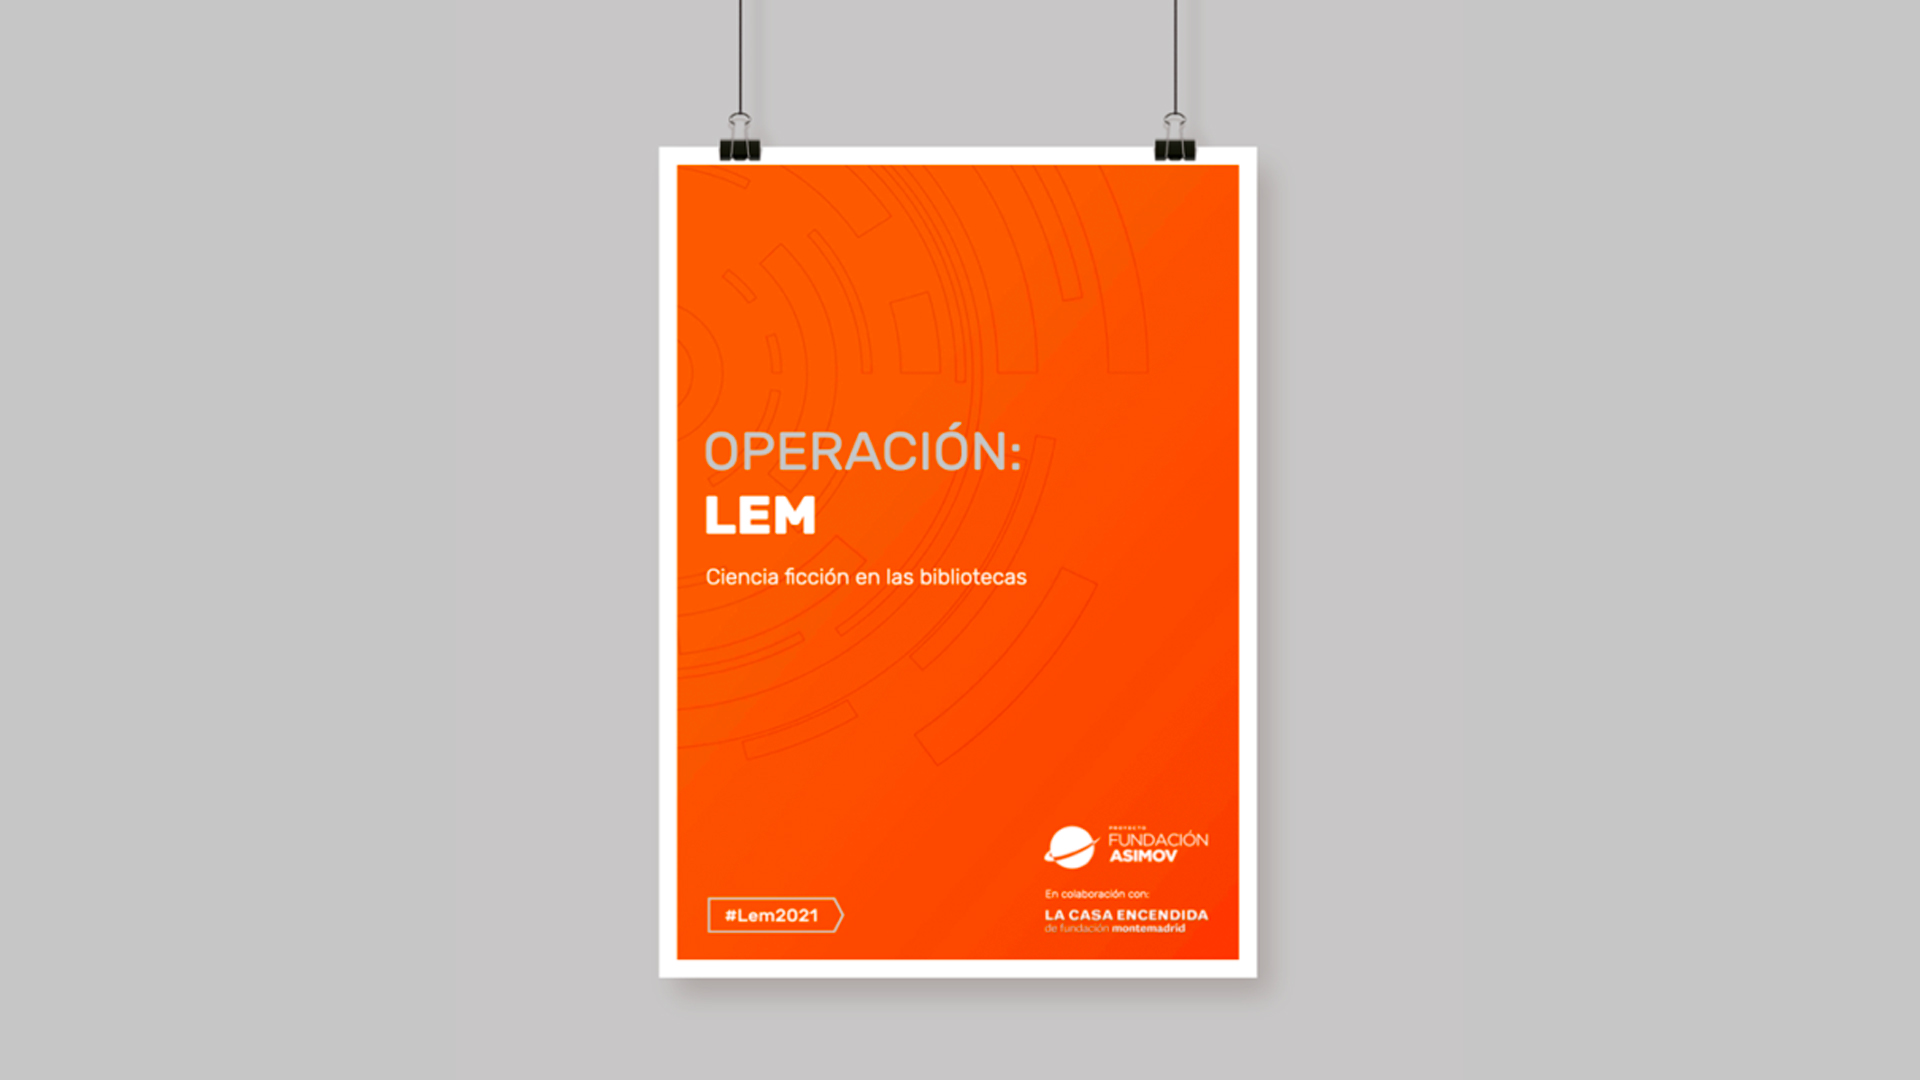 Operación: Lem